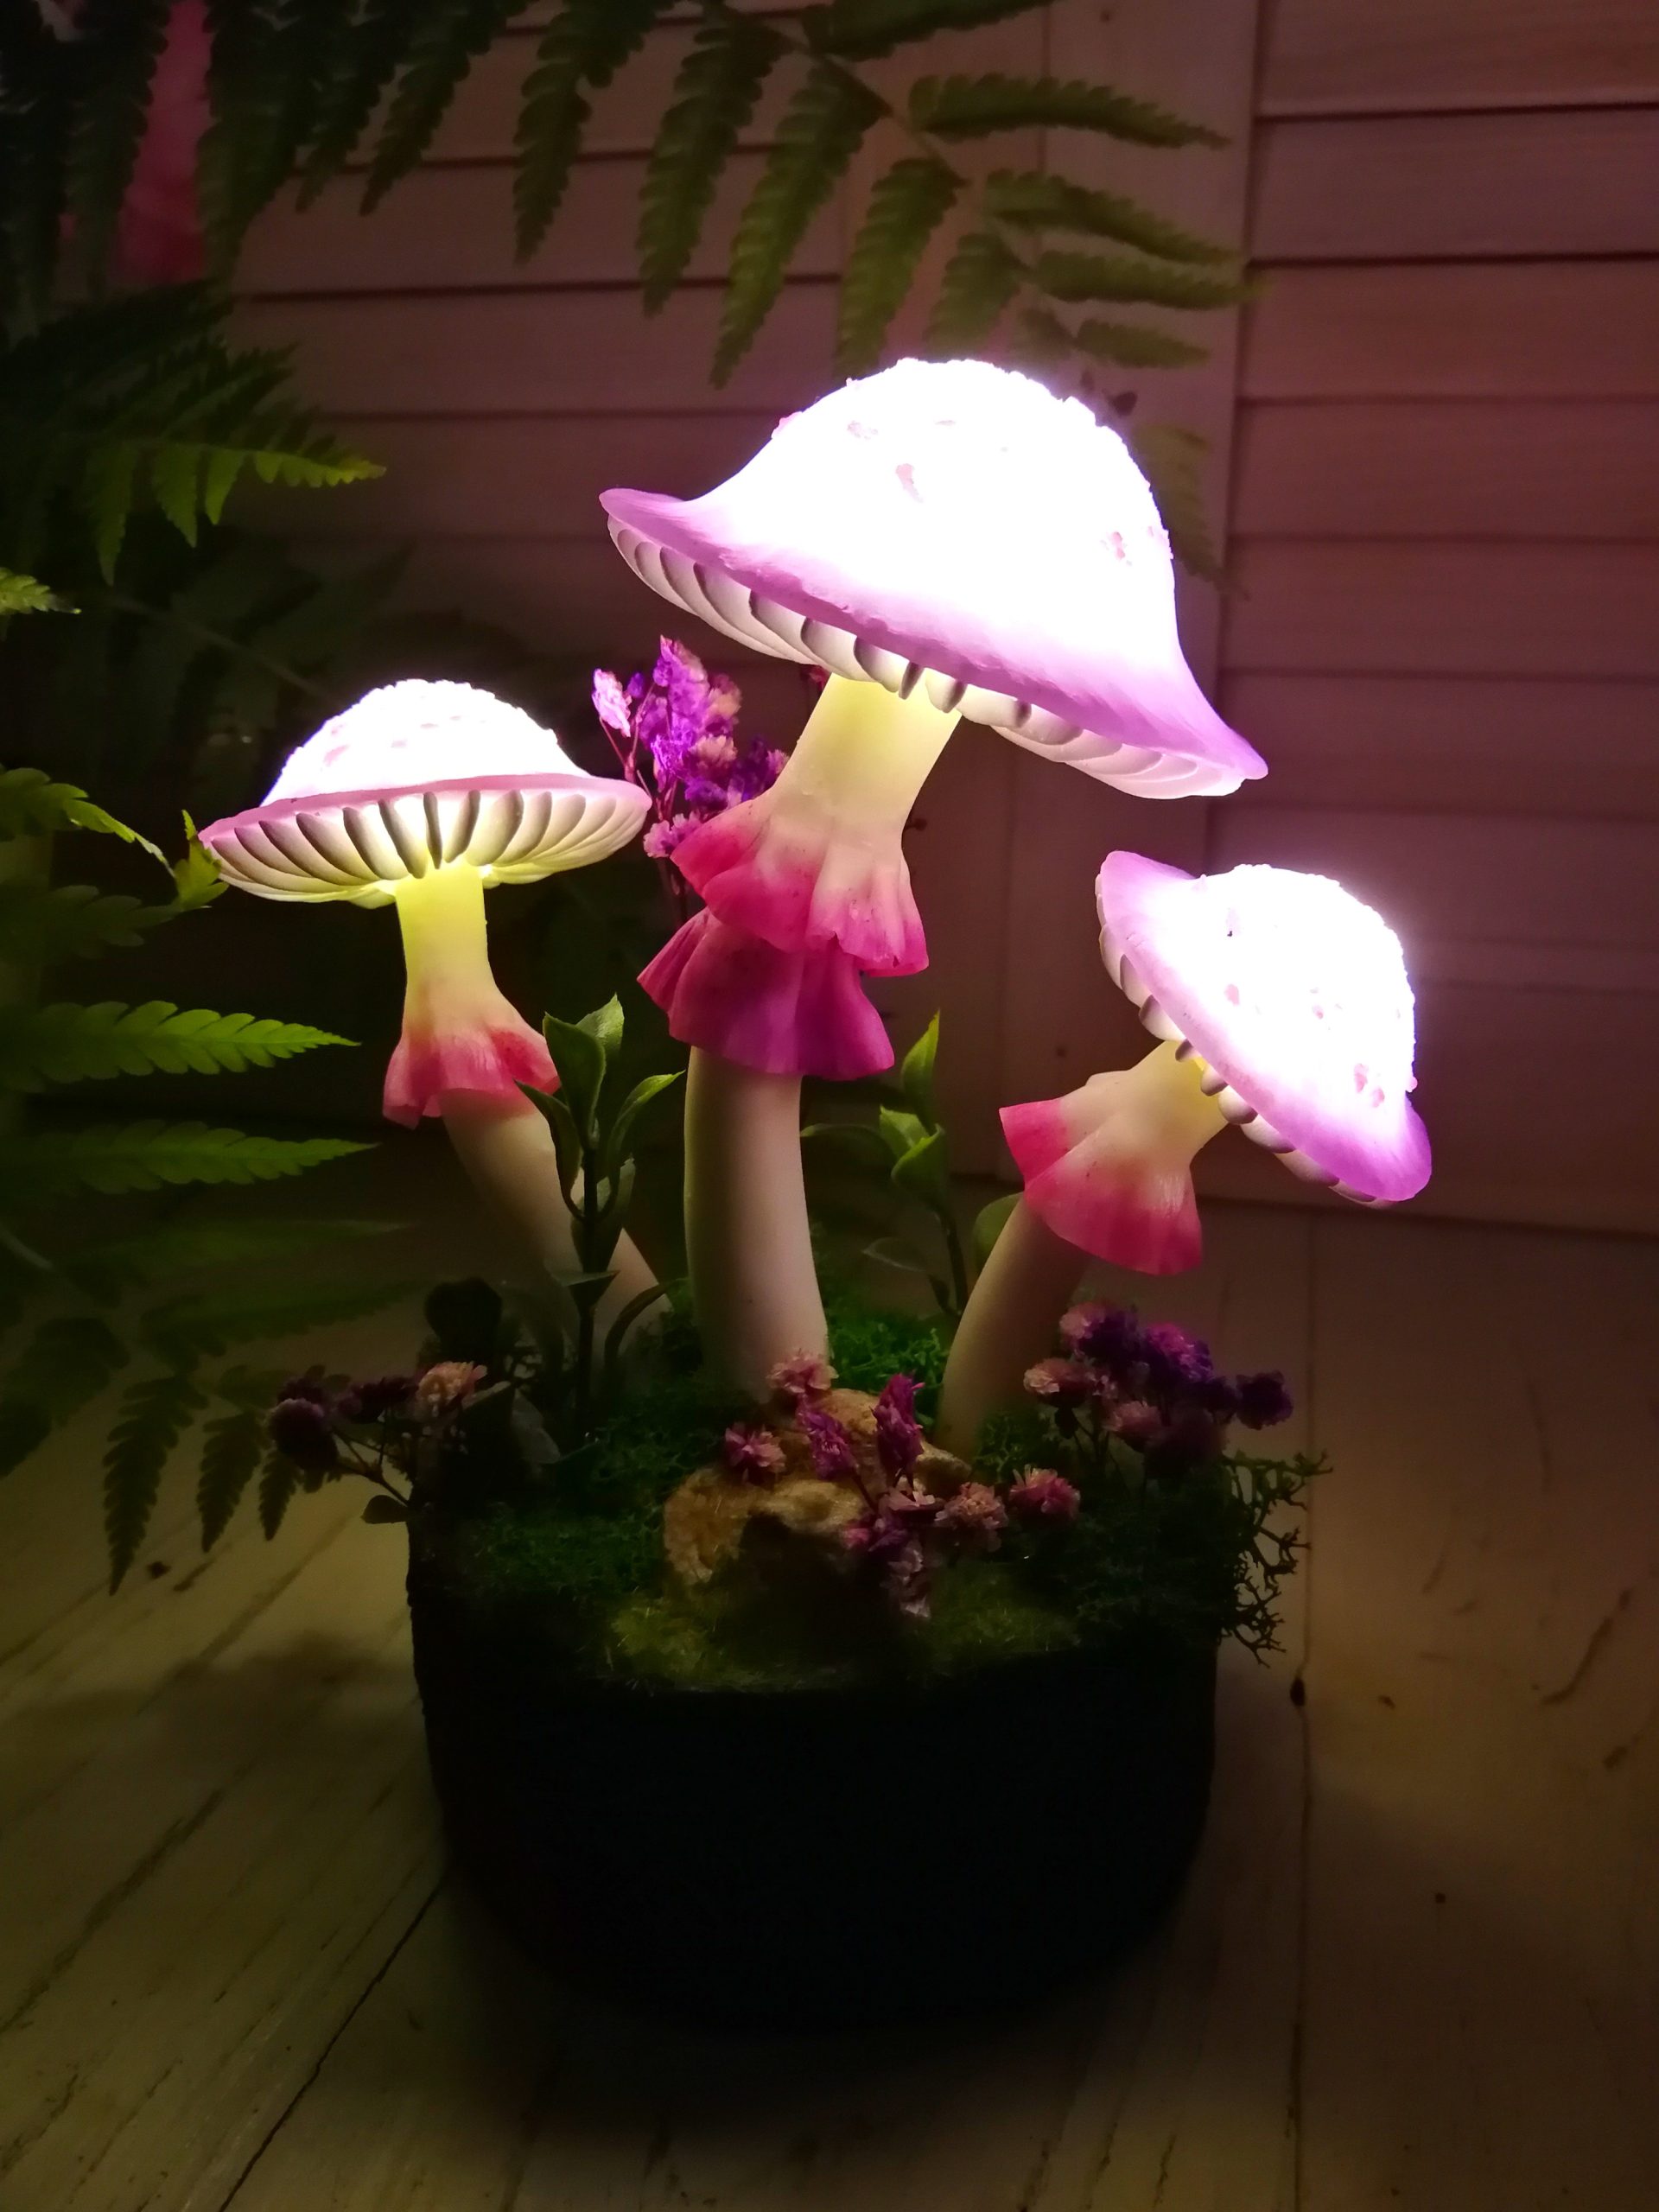 pink mushroom lamp consisting of pink LED mushrooms